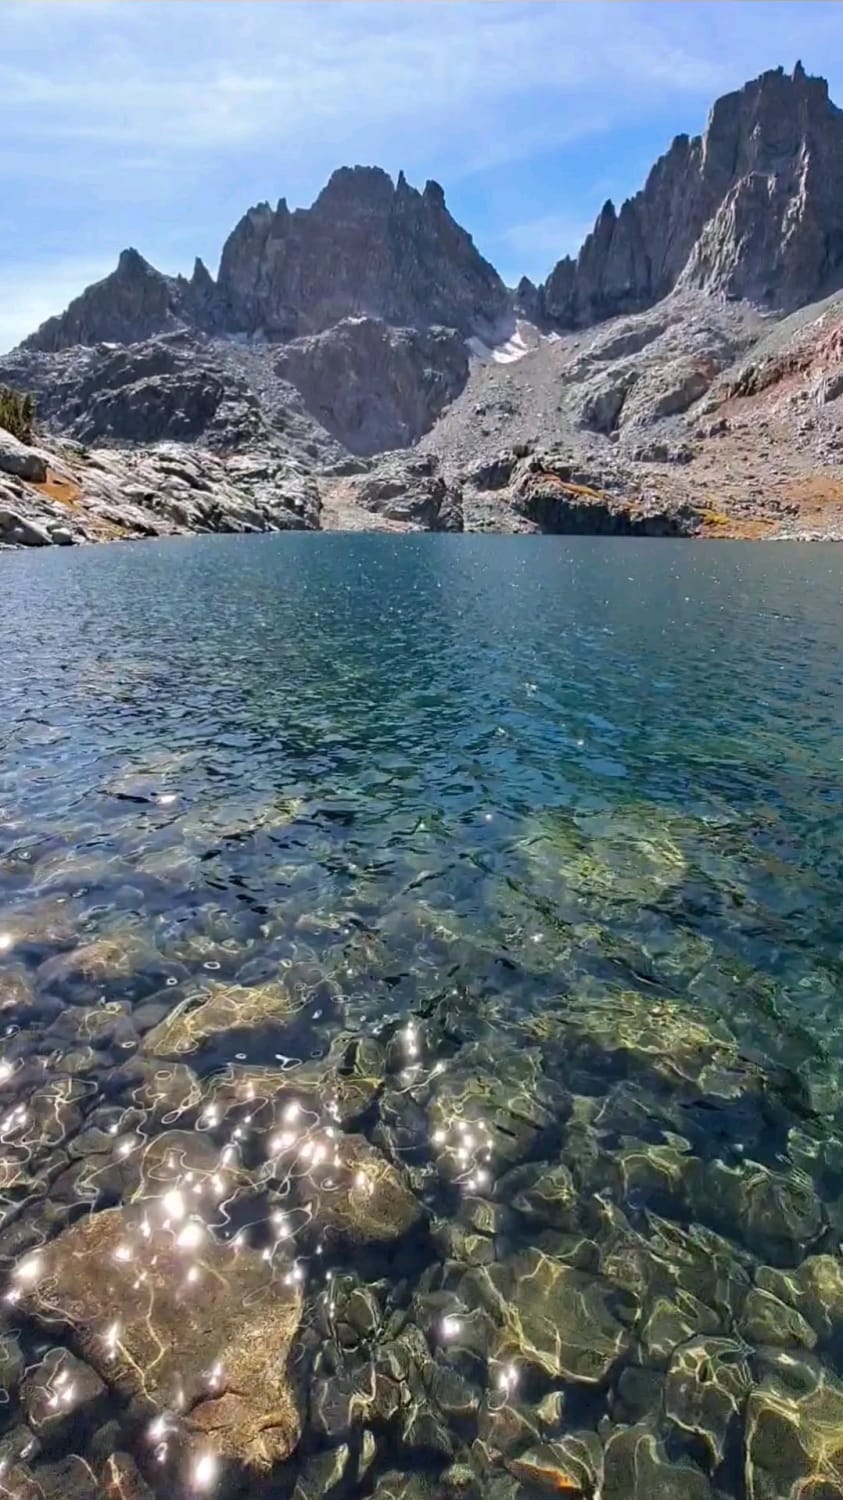 Them alpine lakes are somethin' else, Eastern Sierra, CA, USA [Sept 2021]